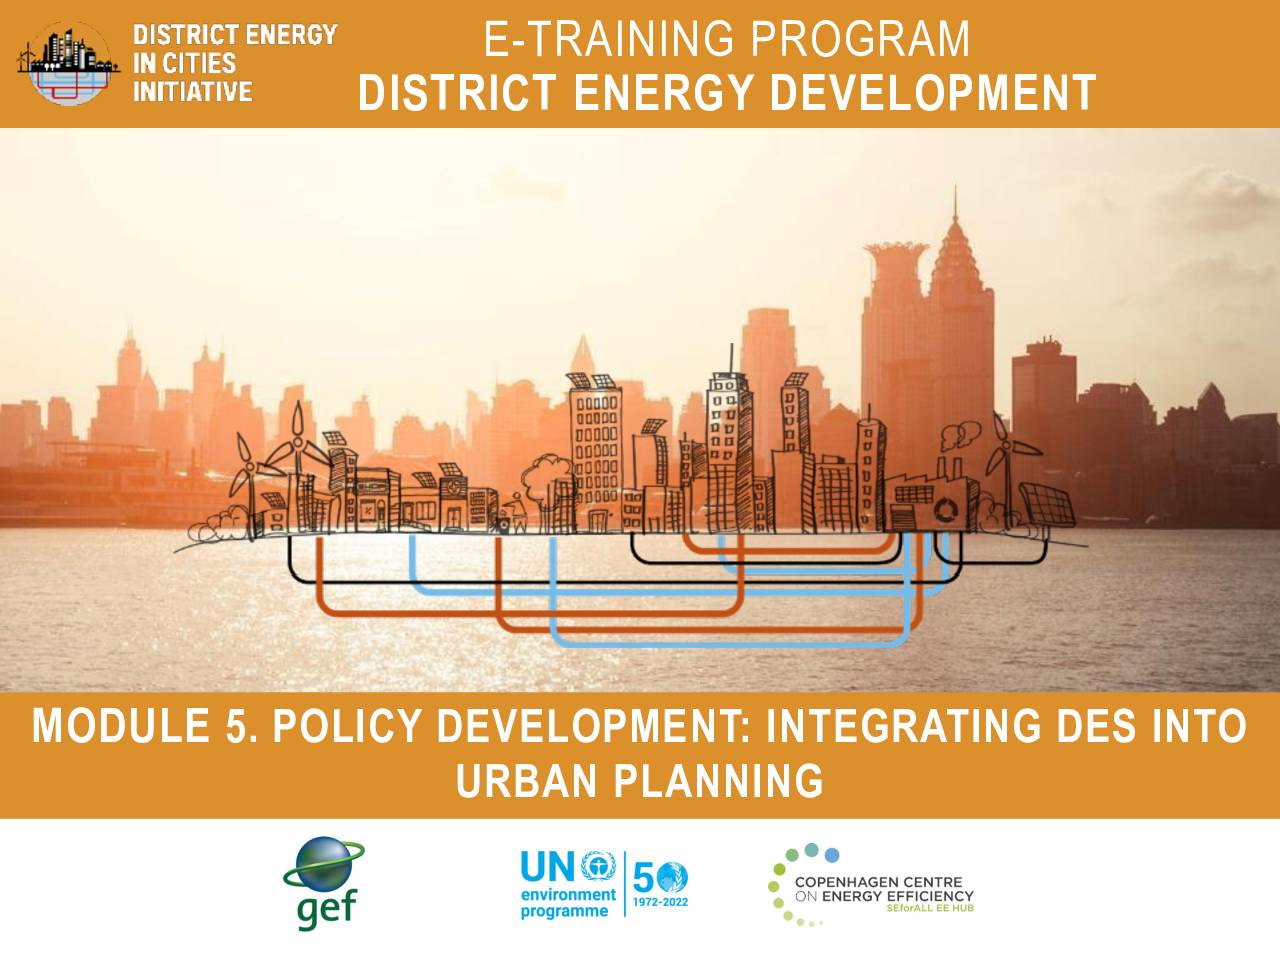 Module 5 – Policy development: Integrating DES into urban planning